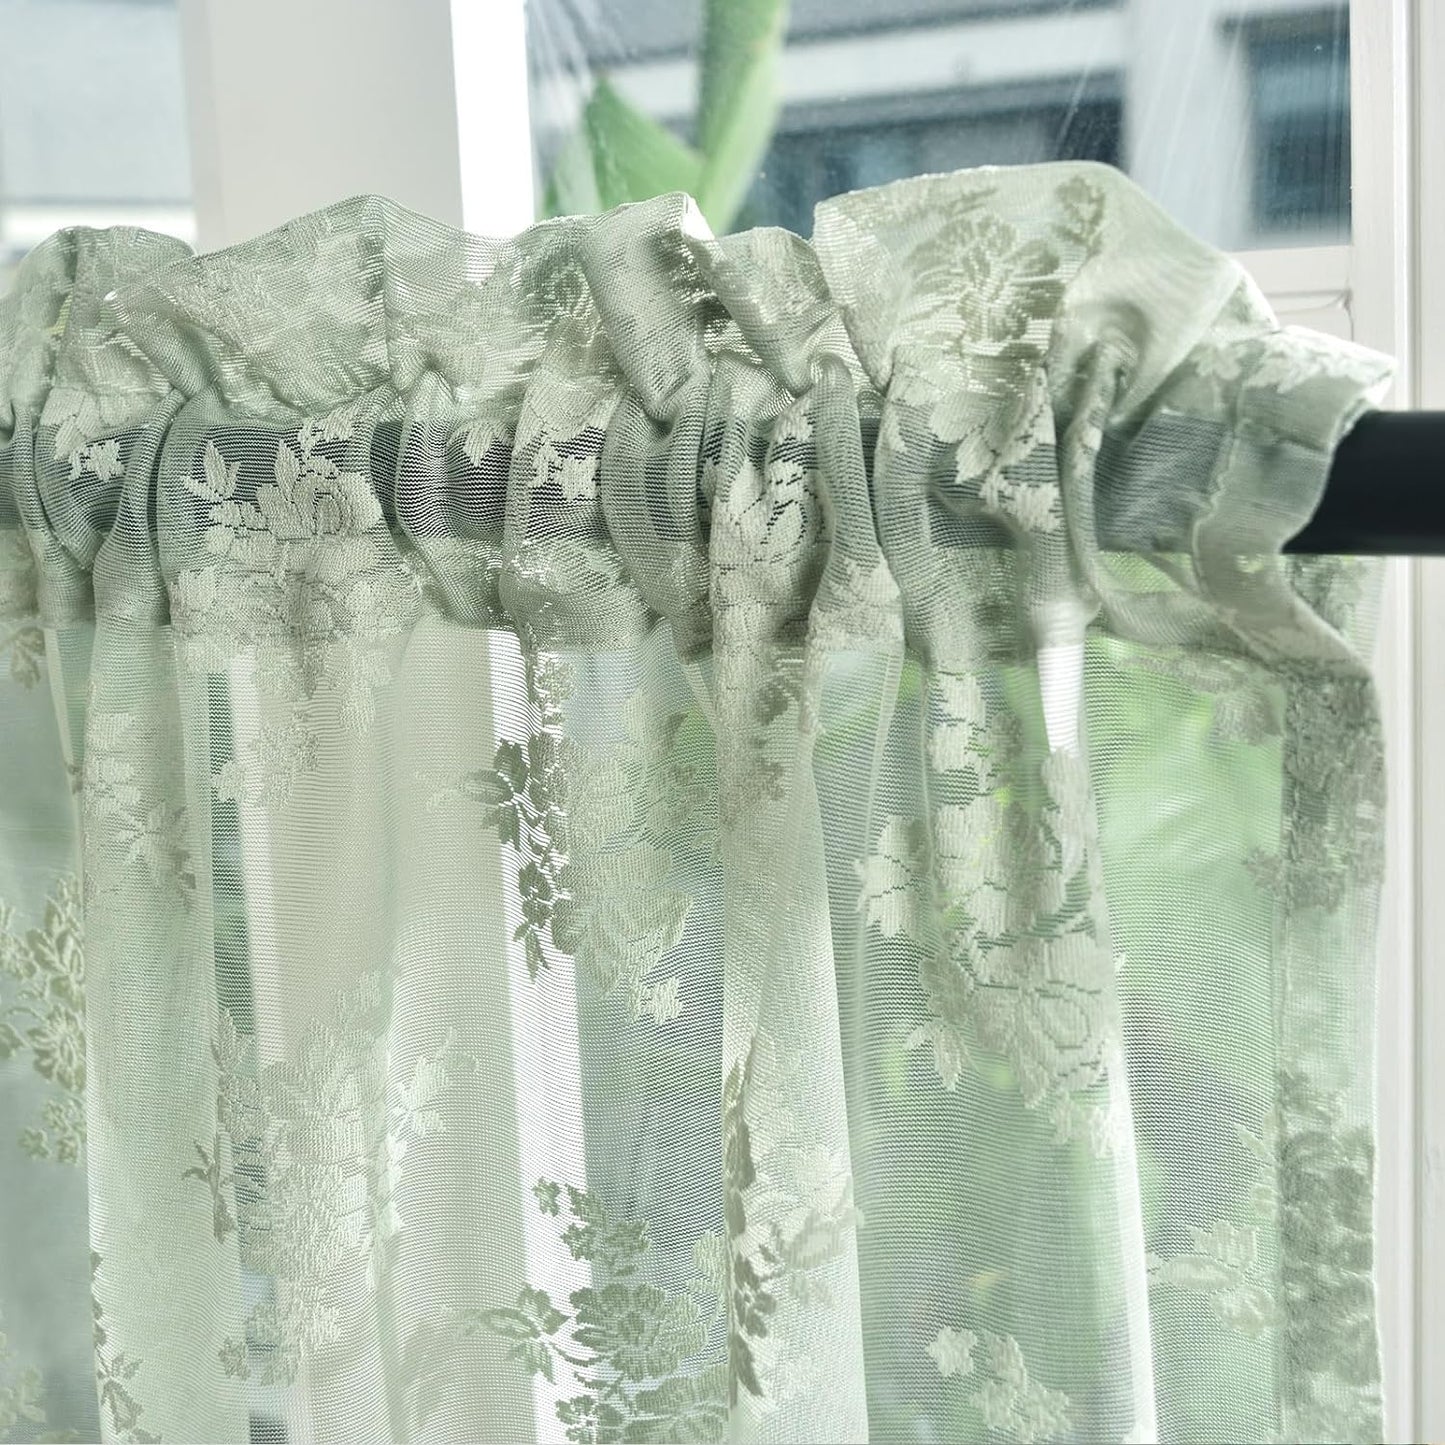 Kotile Sage Green Sheer Valance Curtain for Windows, Rustic Floral Spring Sheer Window Valance Curtain 18 Inch Length, Light Filtering Rod Pocket Lace Valance, 52 X 18 Inch, 1 Panel, Sage Green  Kotile Textile   